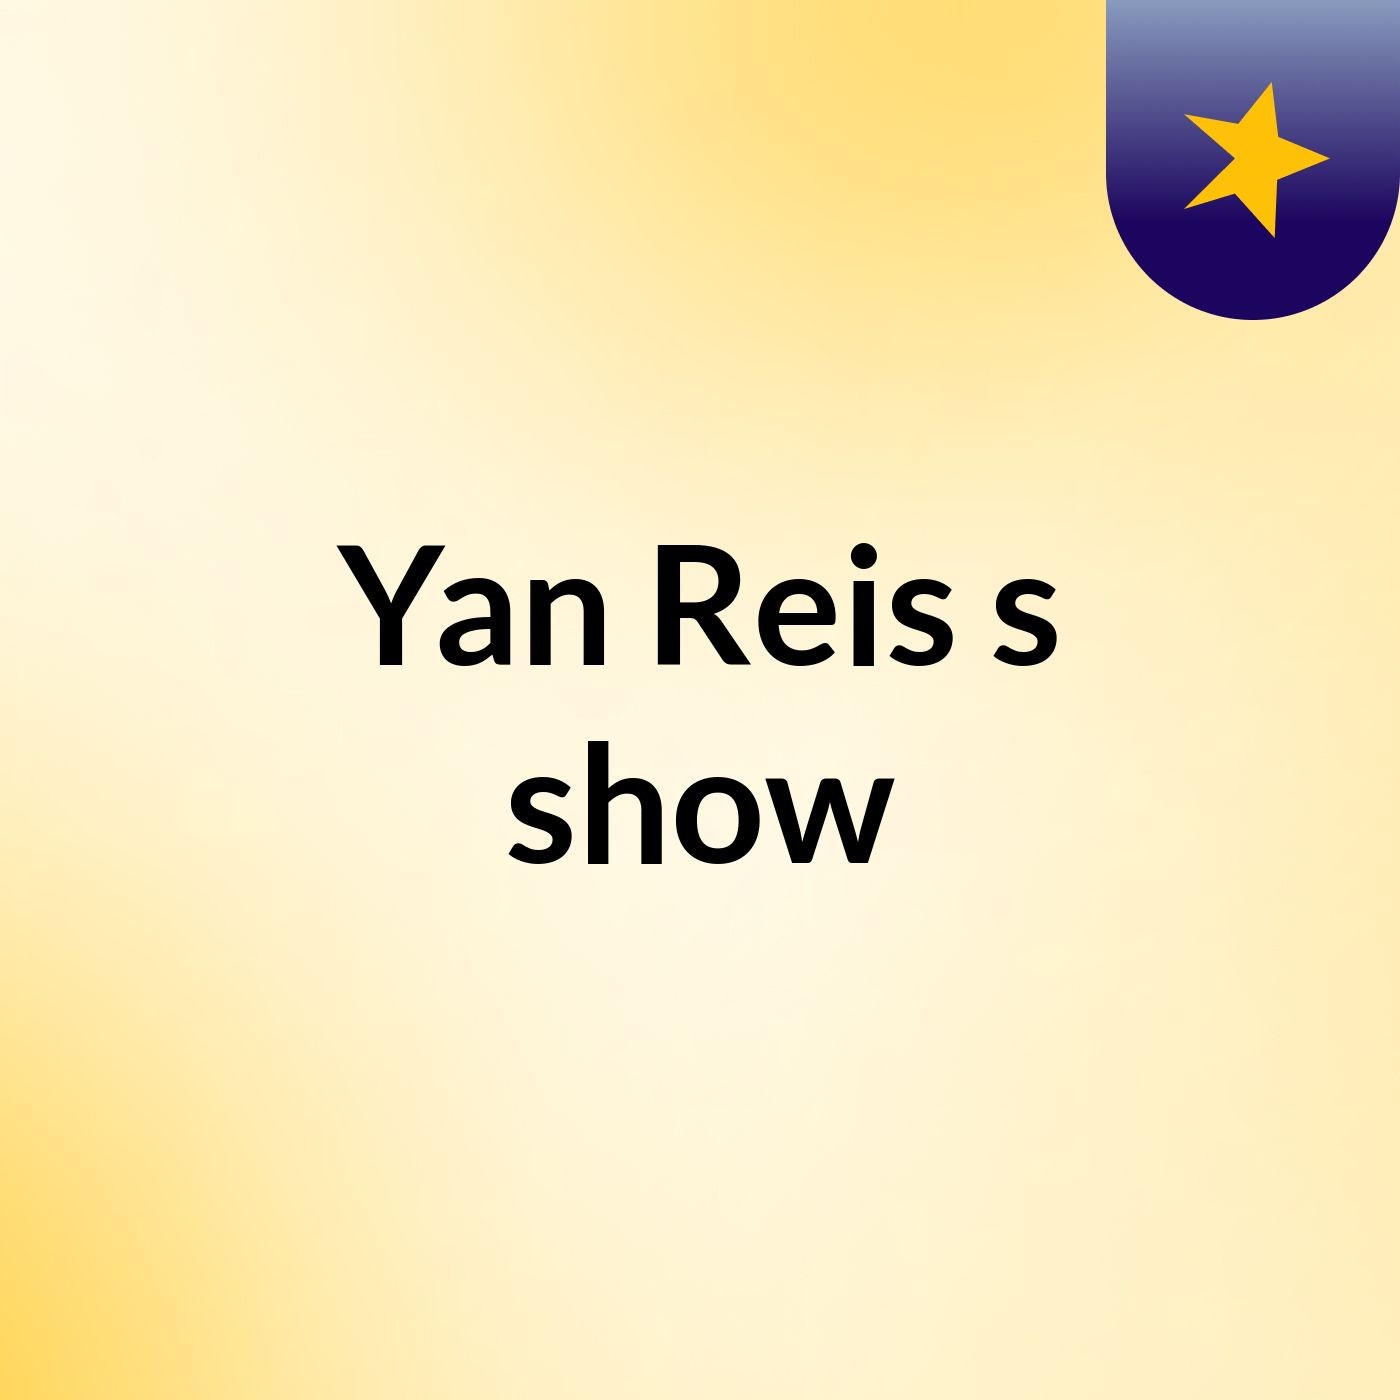 Yan Reis's show